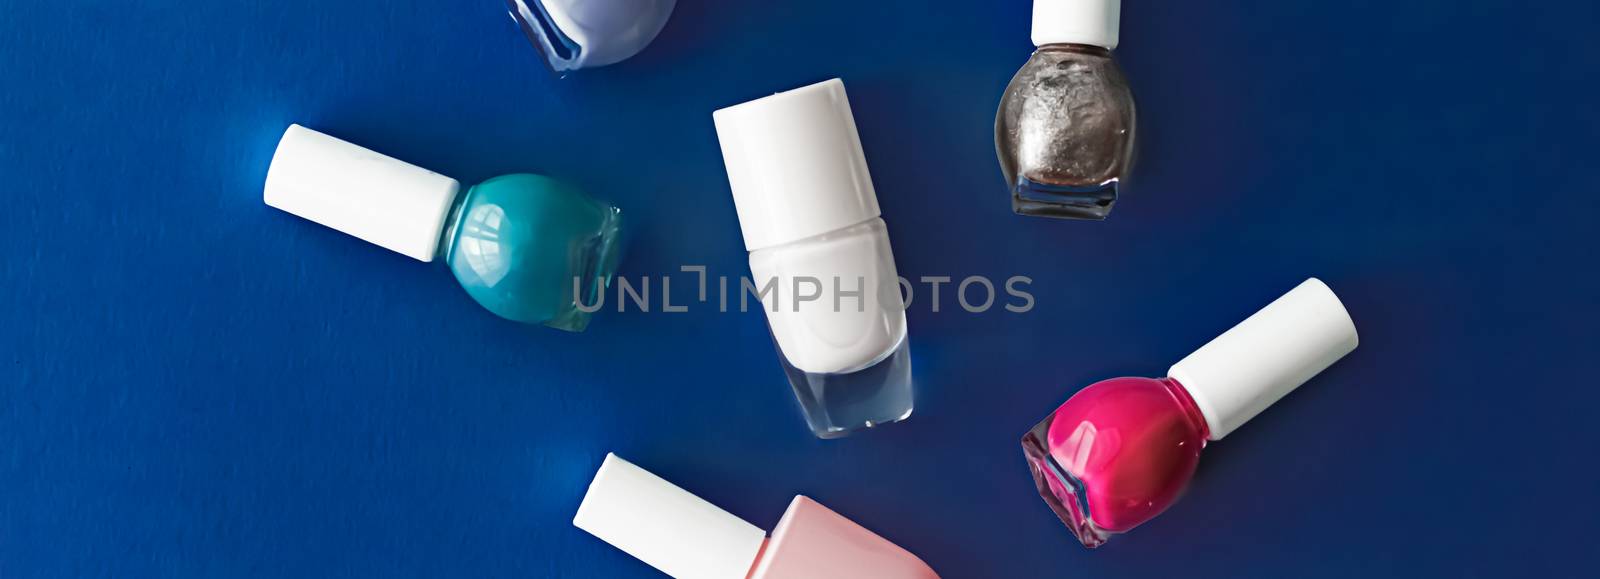 Nail polish bottles on dark blue background, beauty brand by Anneleven